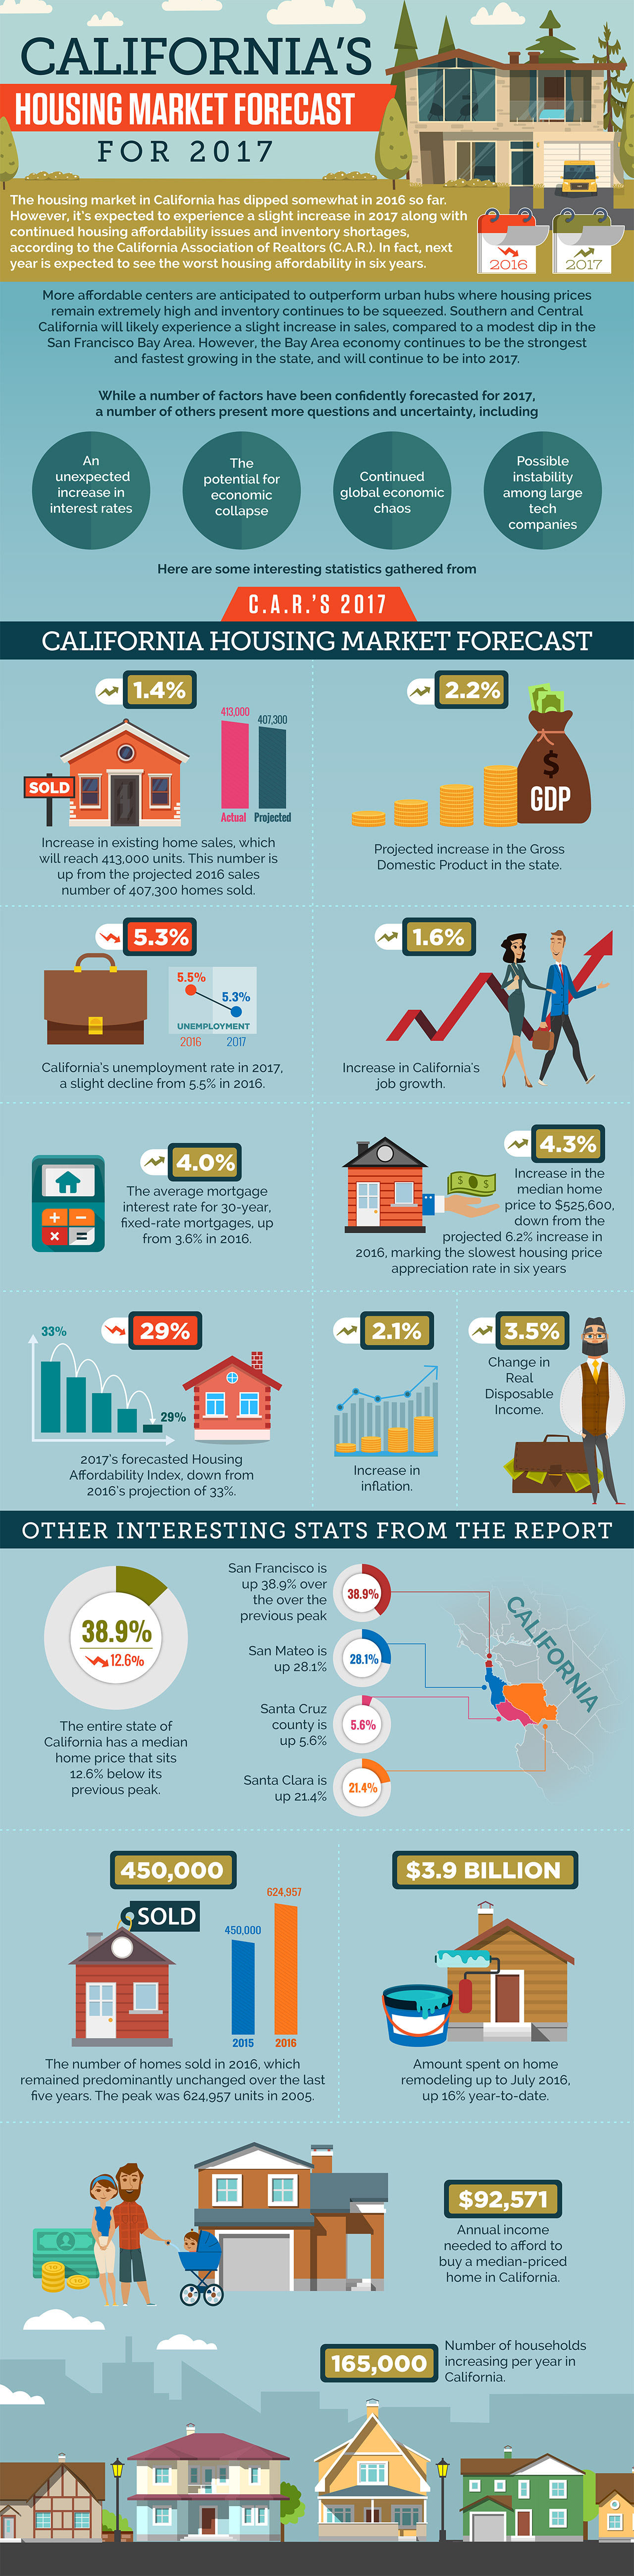 californias-housing-market-forecast-for-2017-infographic